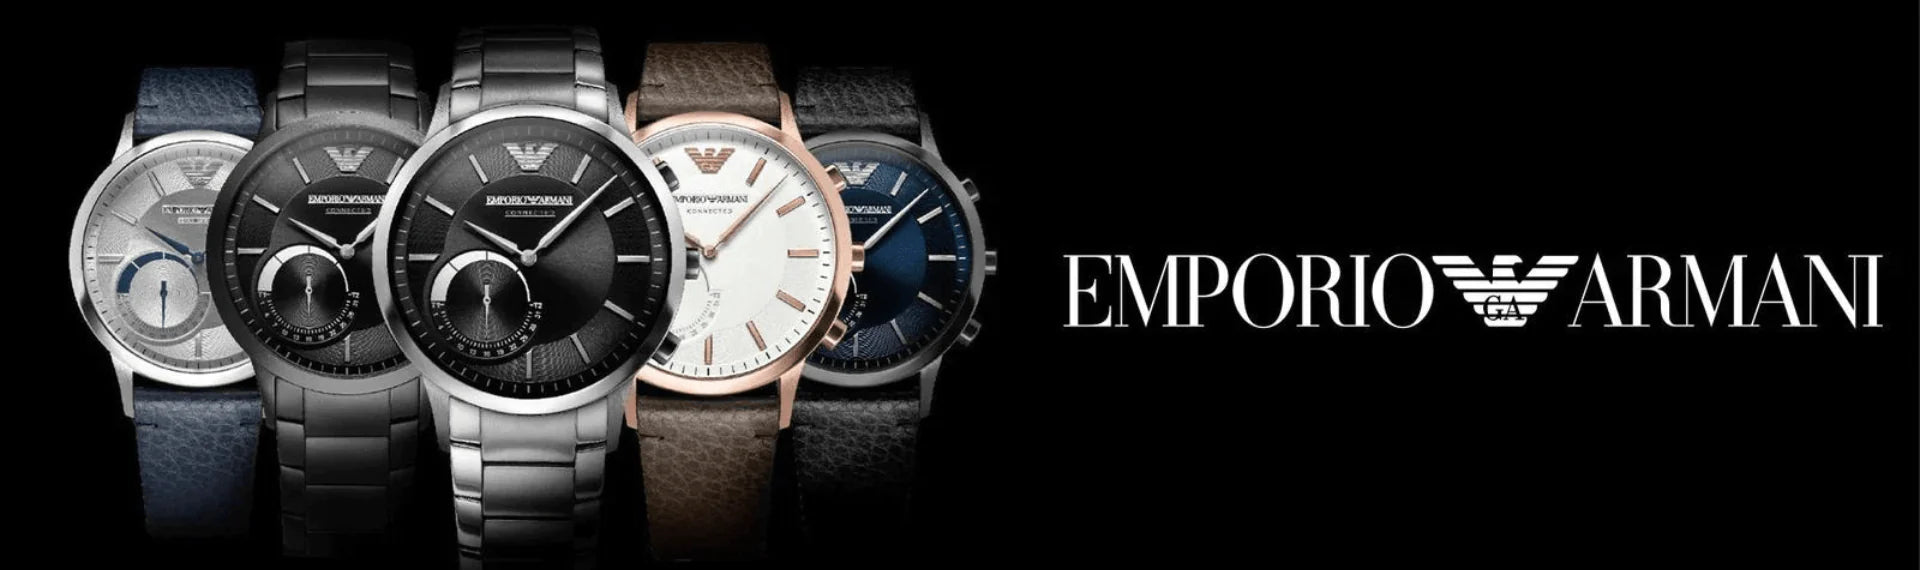 Emporio Armani Watches for Men